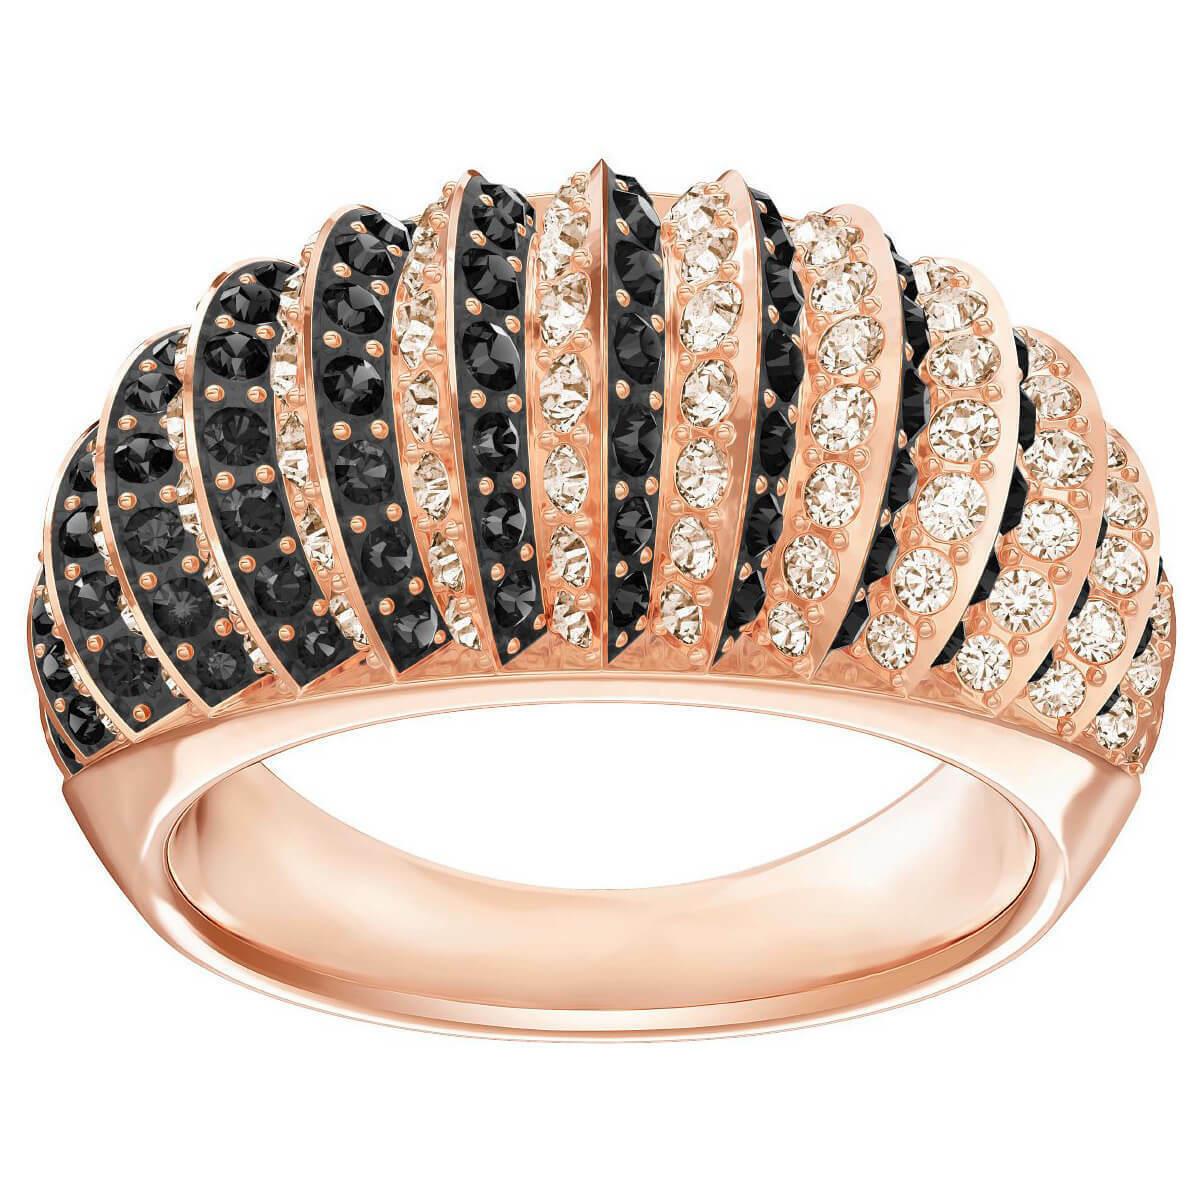 Swarovski Luxury Domed Rose Ring - Size 6 - Rrp